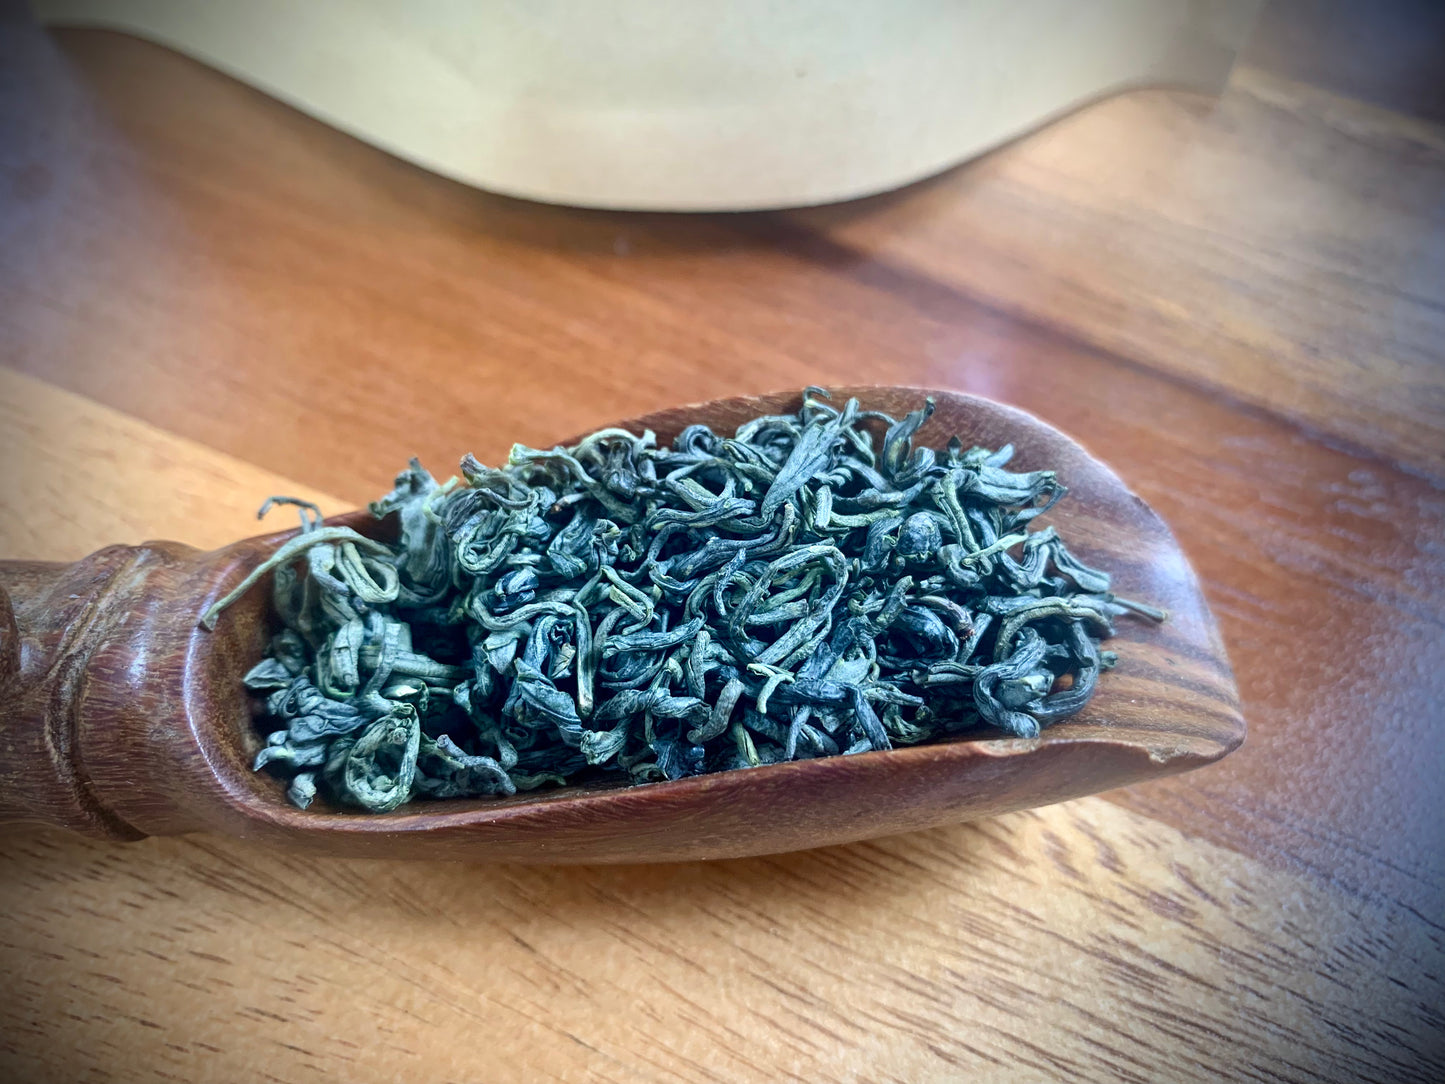 Wudang Daoist Premium Green Tea